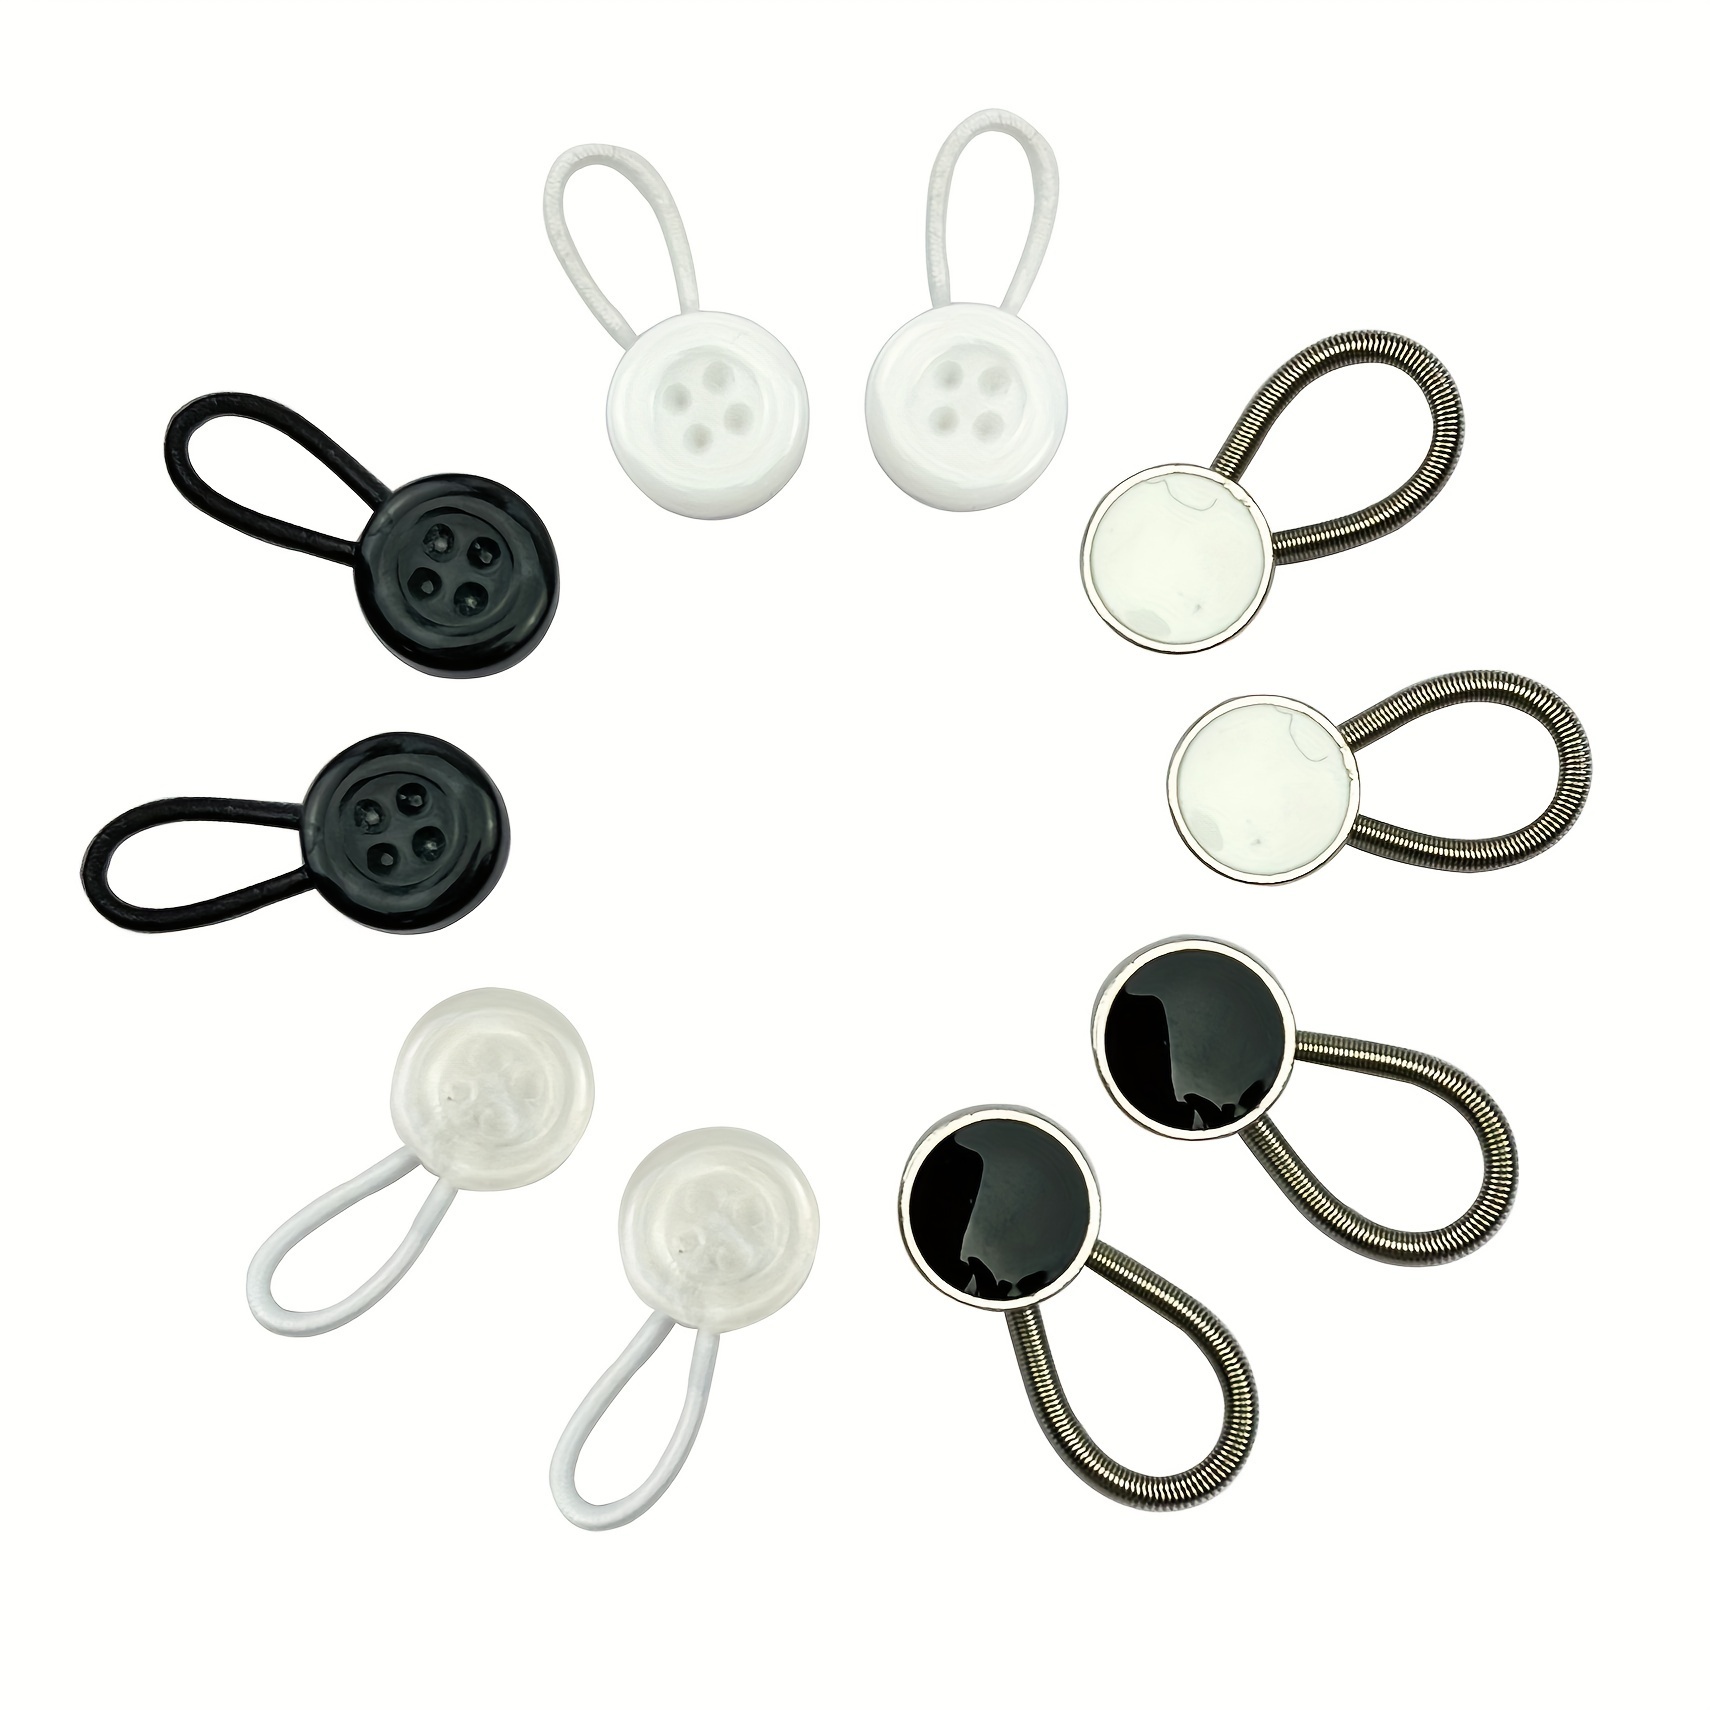 Men's Multifunctional Elastic Collar Extender Formal Shirt Collar Extender  White and Black Spring Adjustment Buttons - AliExpress